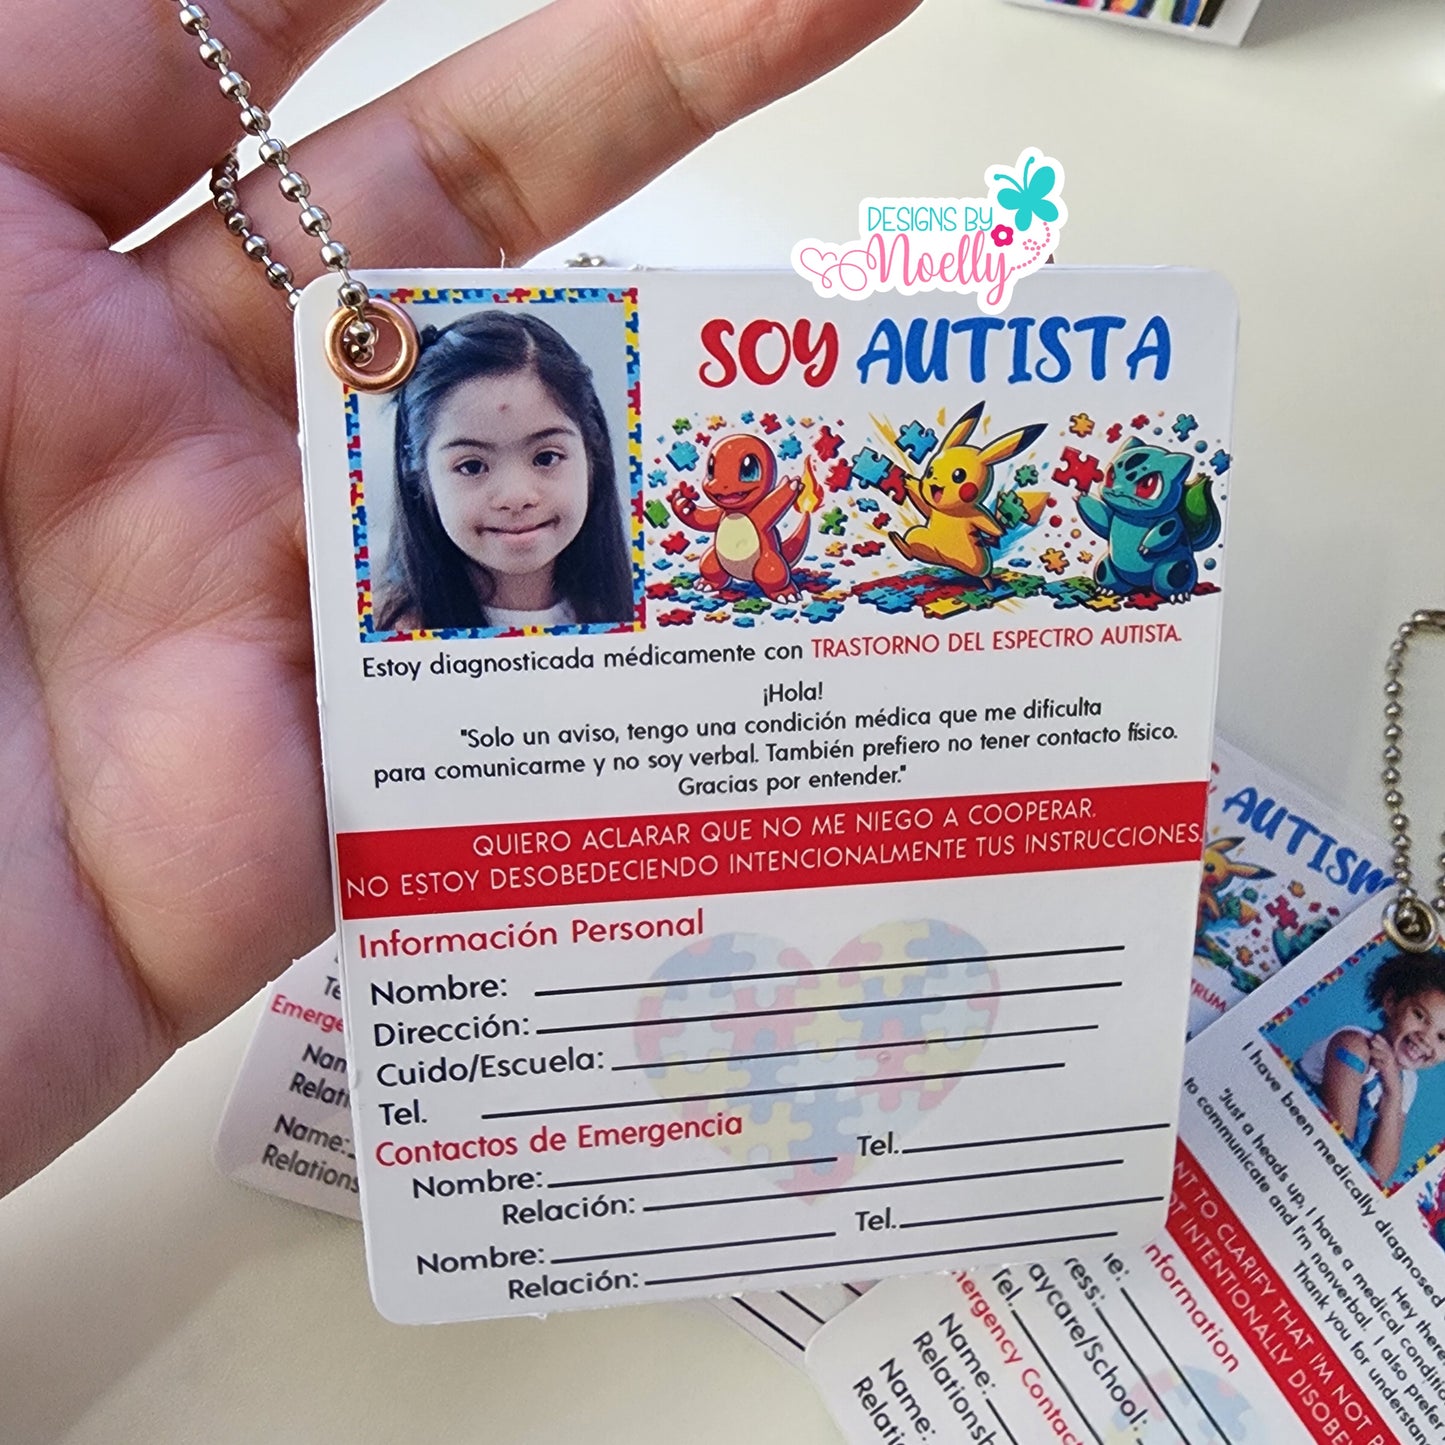 Autism Identification Card